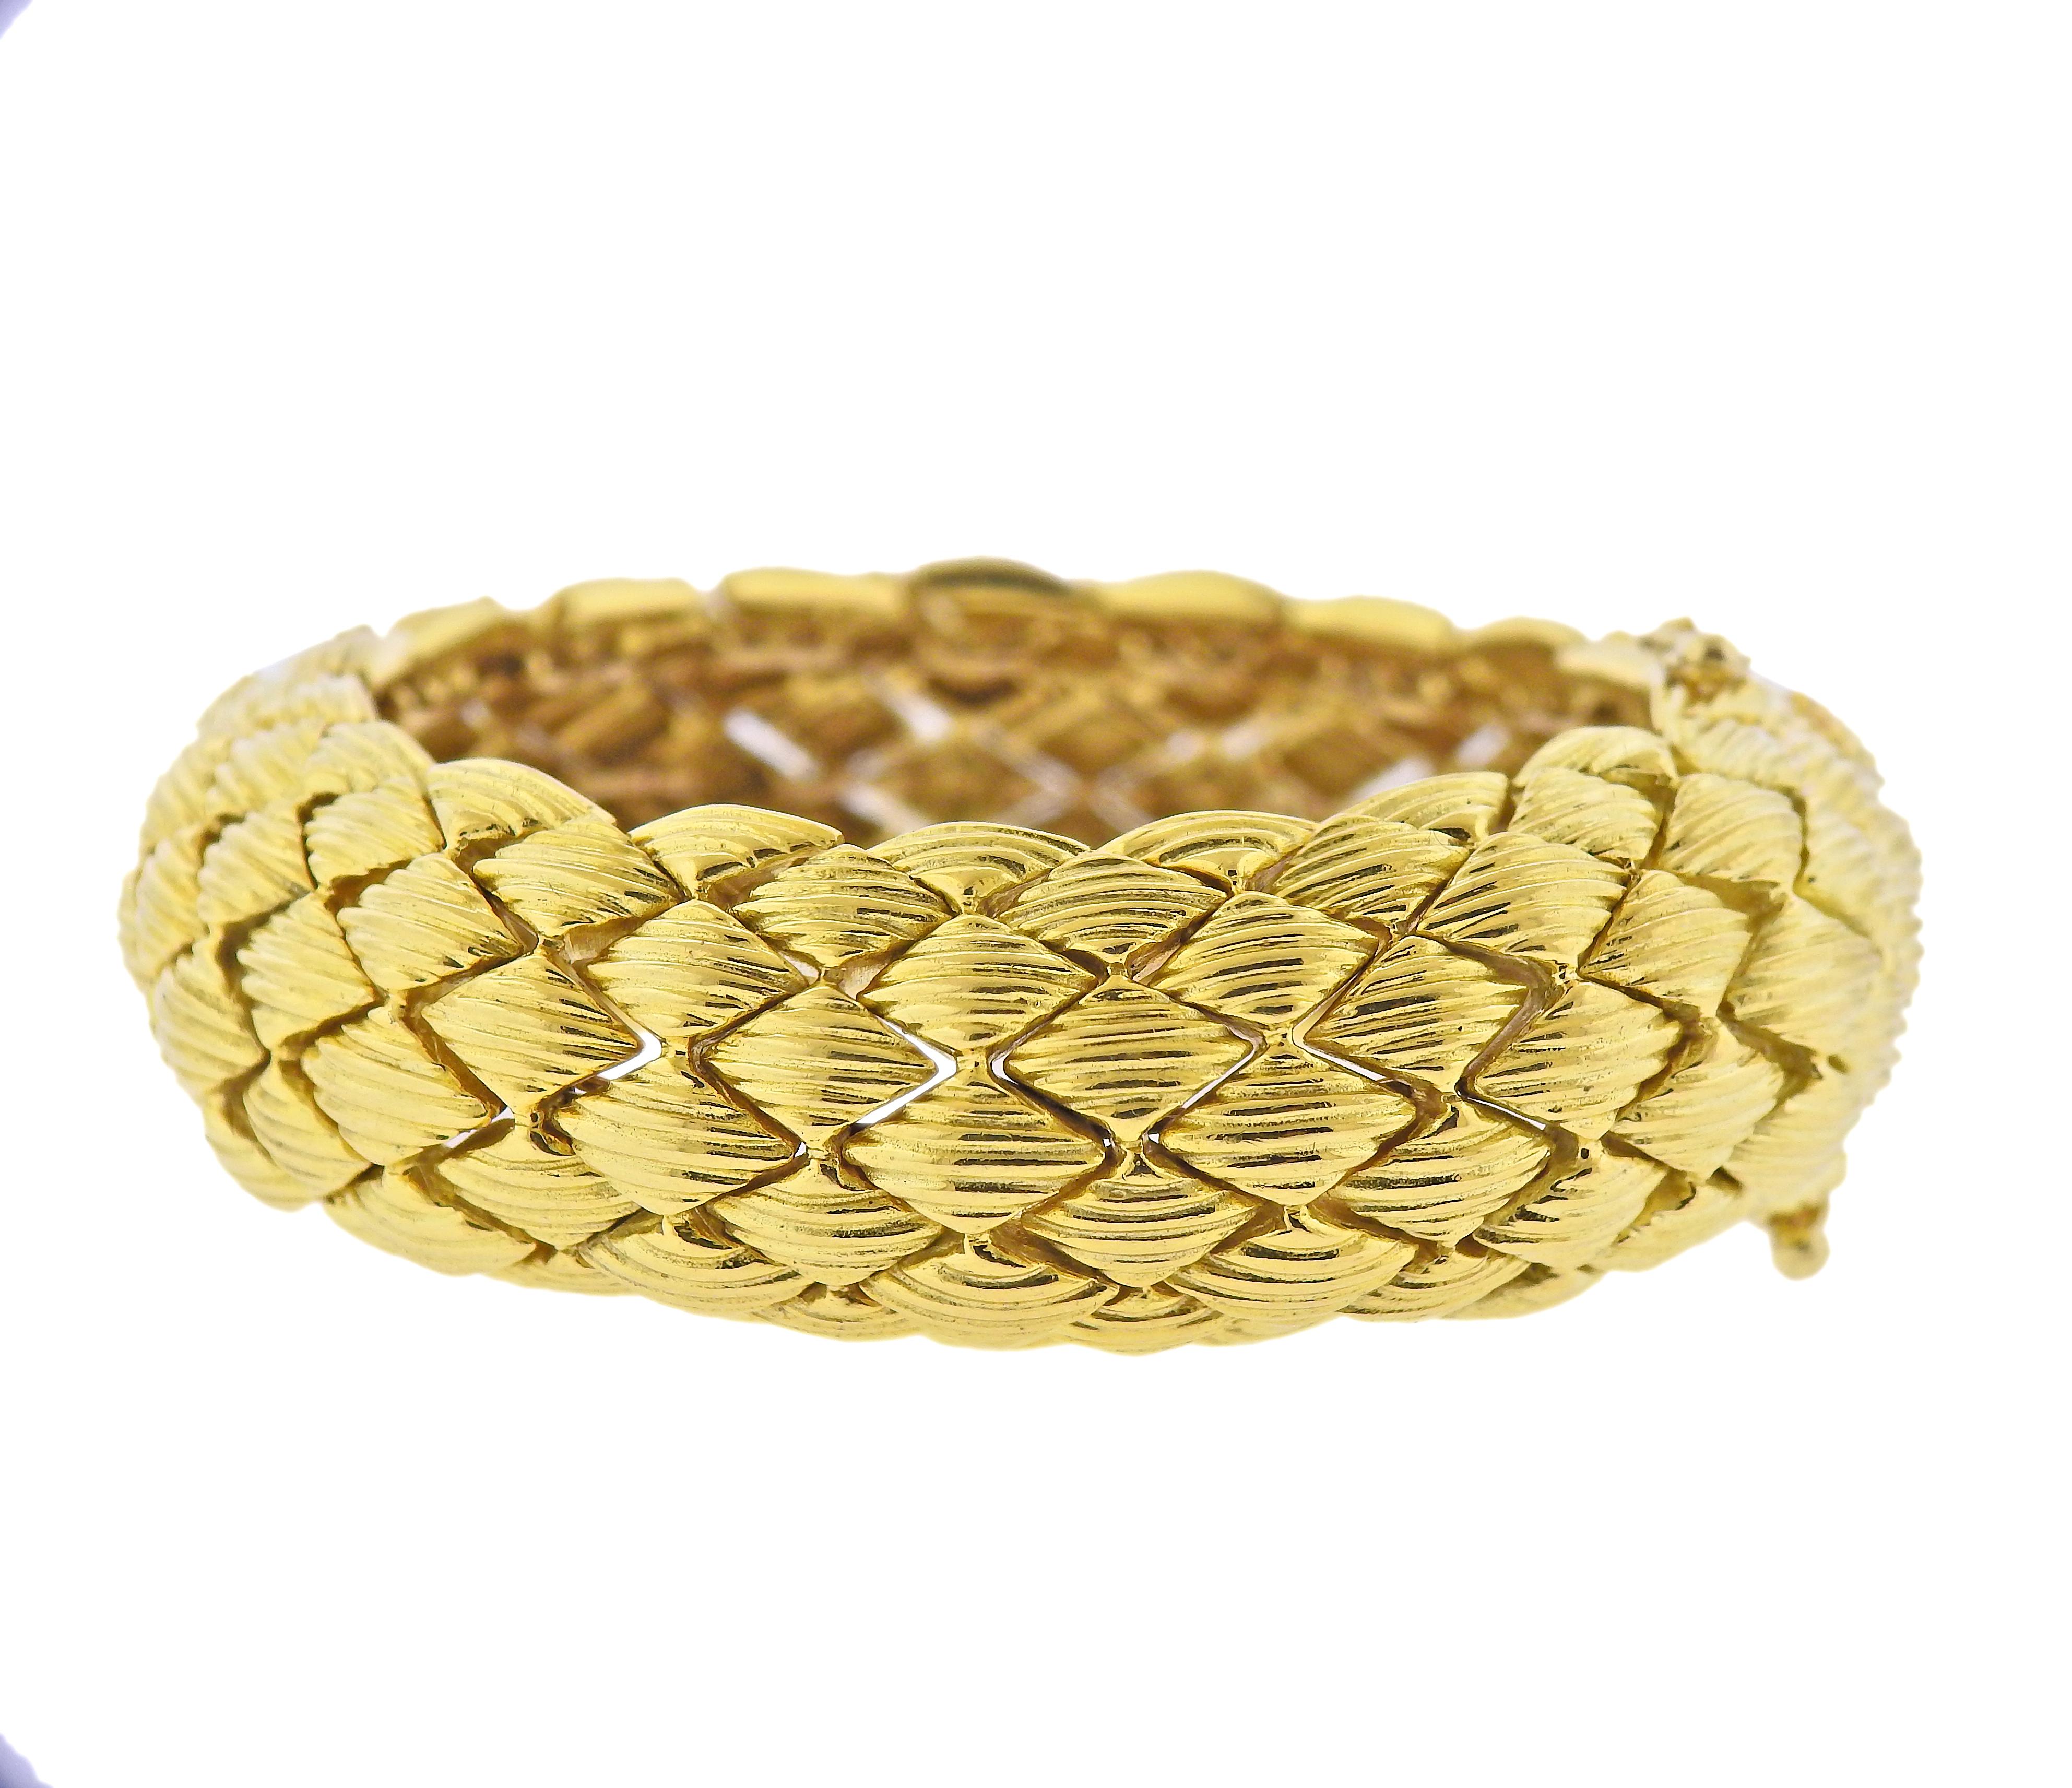 18k yellow gold bracelet by David Webb. Bracelet will fit comfortably up to a 7